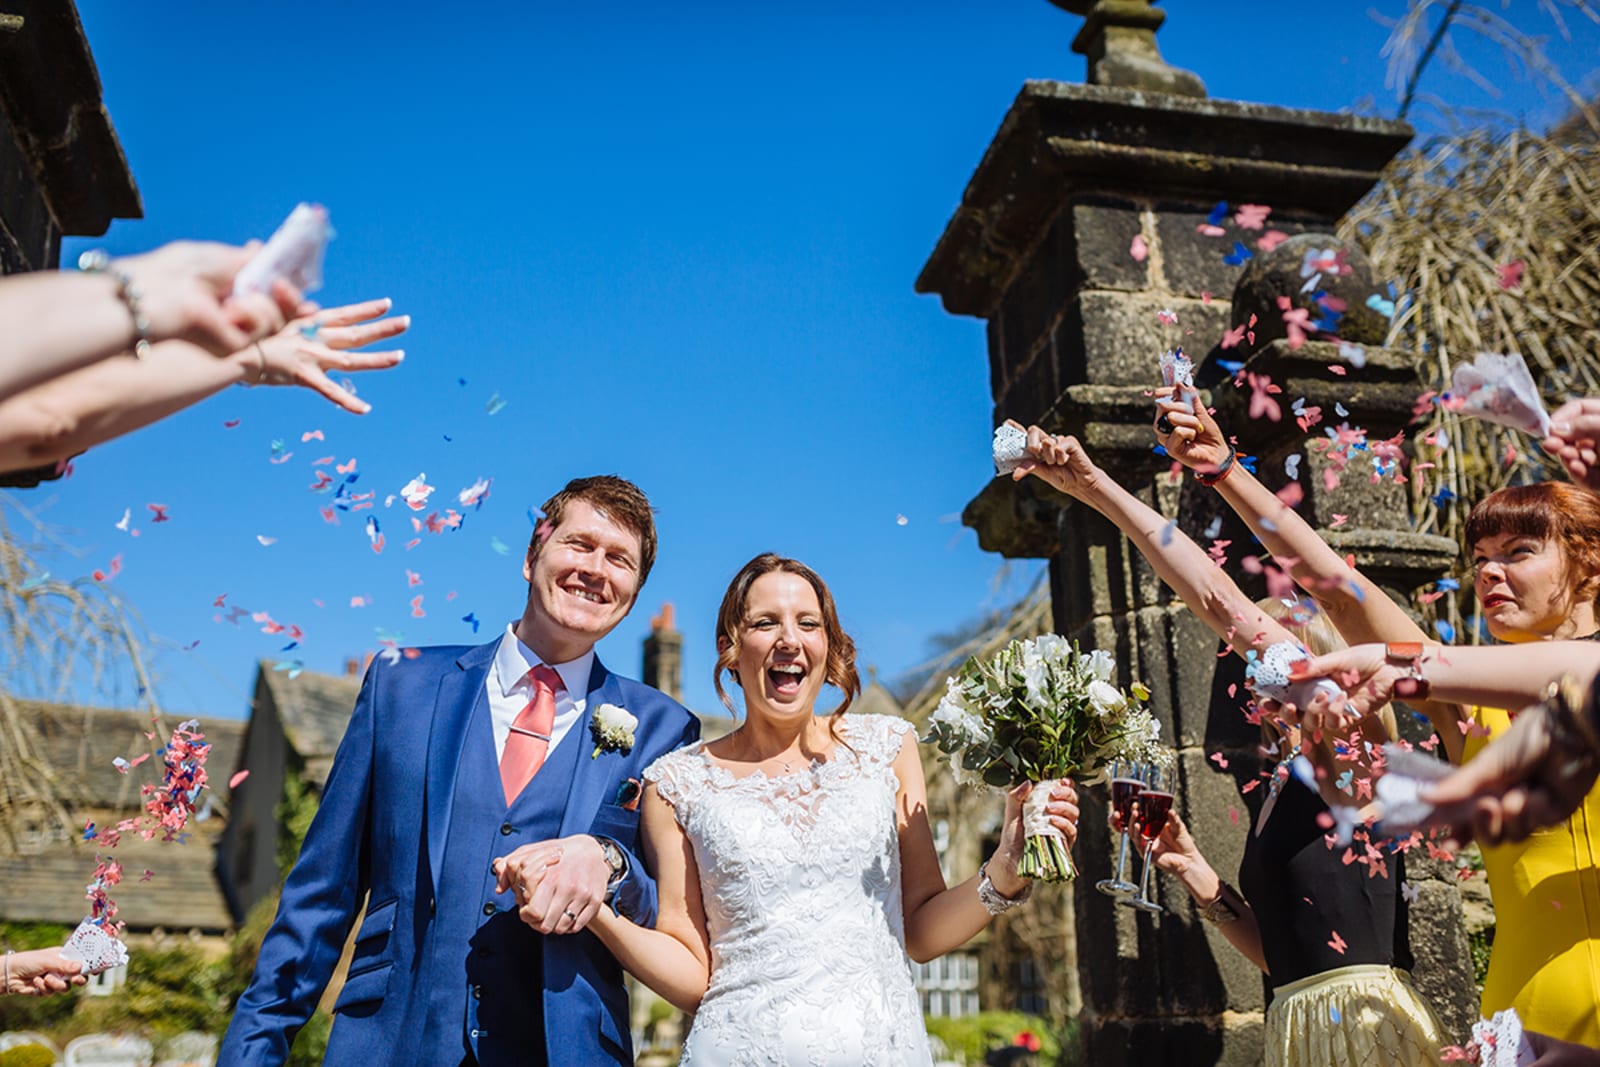 North | West Yorkshire | Halifax | Spring | Classic | DIY | Outdoor | Blue | Orange | Manor House | Real Wedding | James & Lianne Photography #Bridebook #RealWedding #WeddingIdeas Bridebook.co.uk 